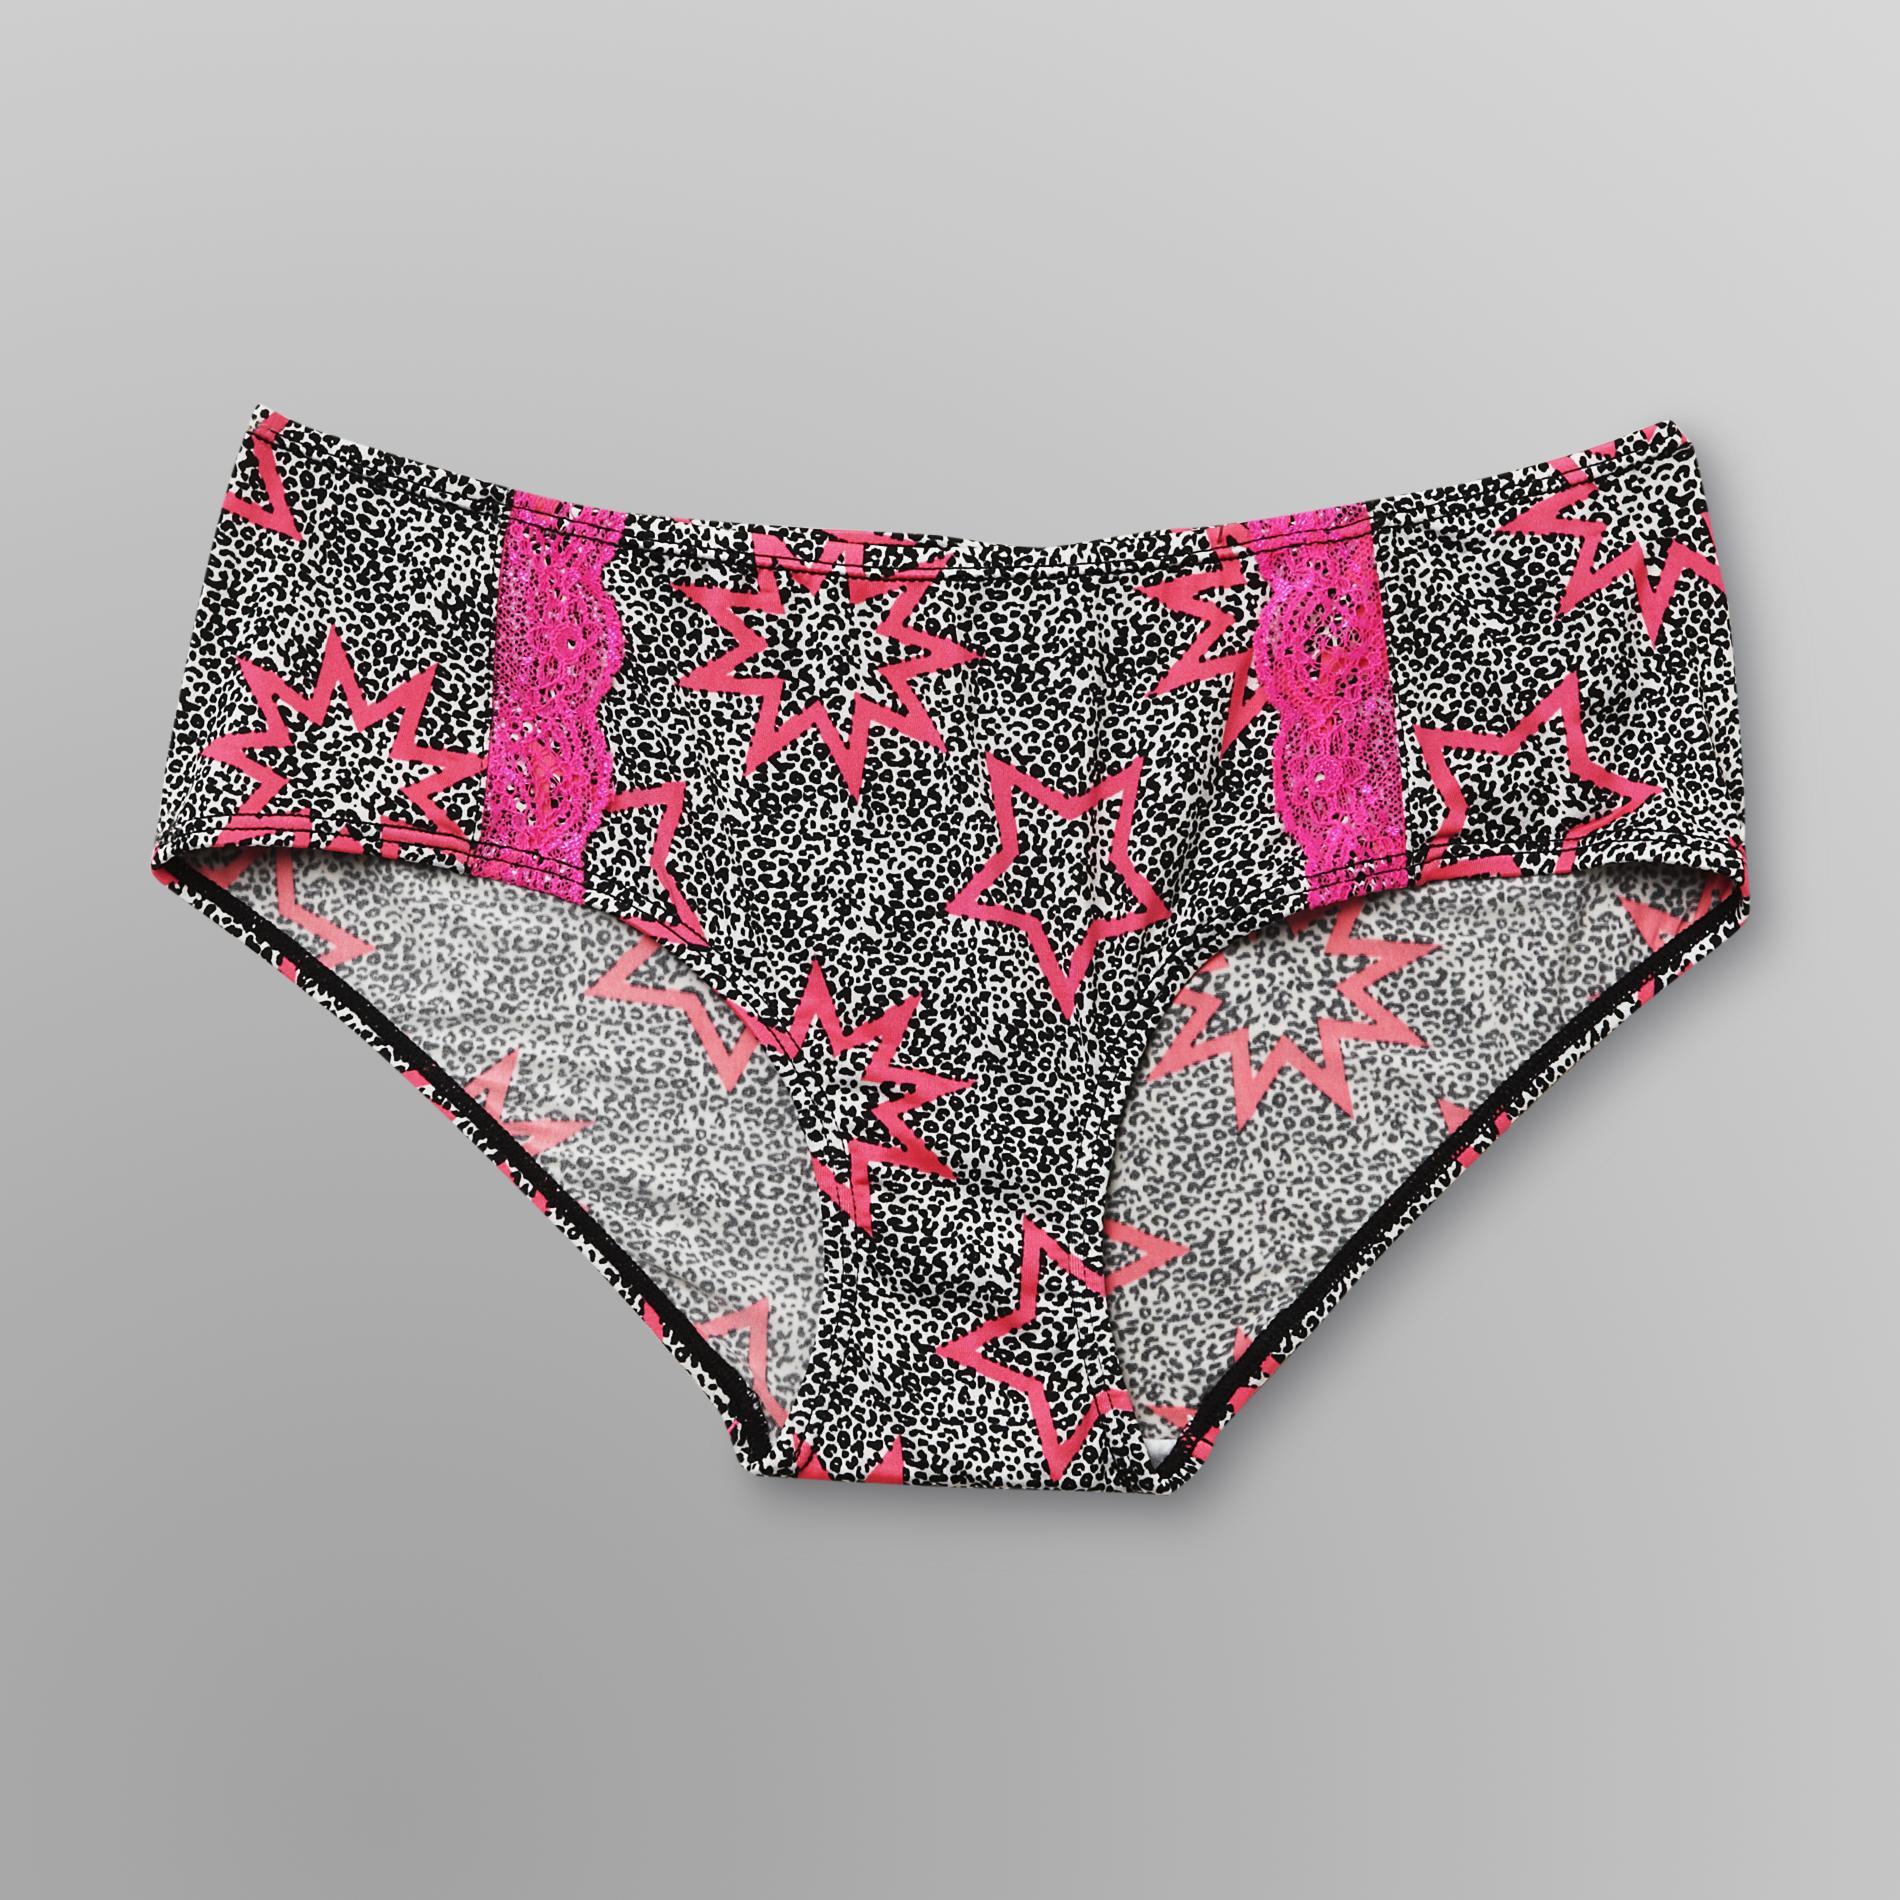 Joe Boxer Women's Hipster Panties - Leopard Print